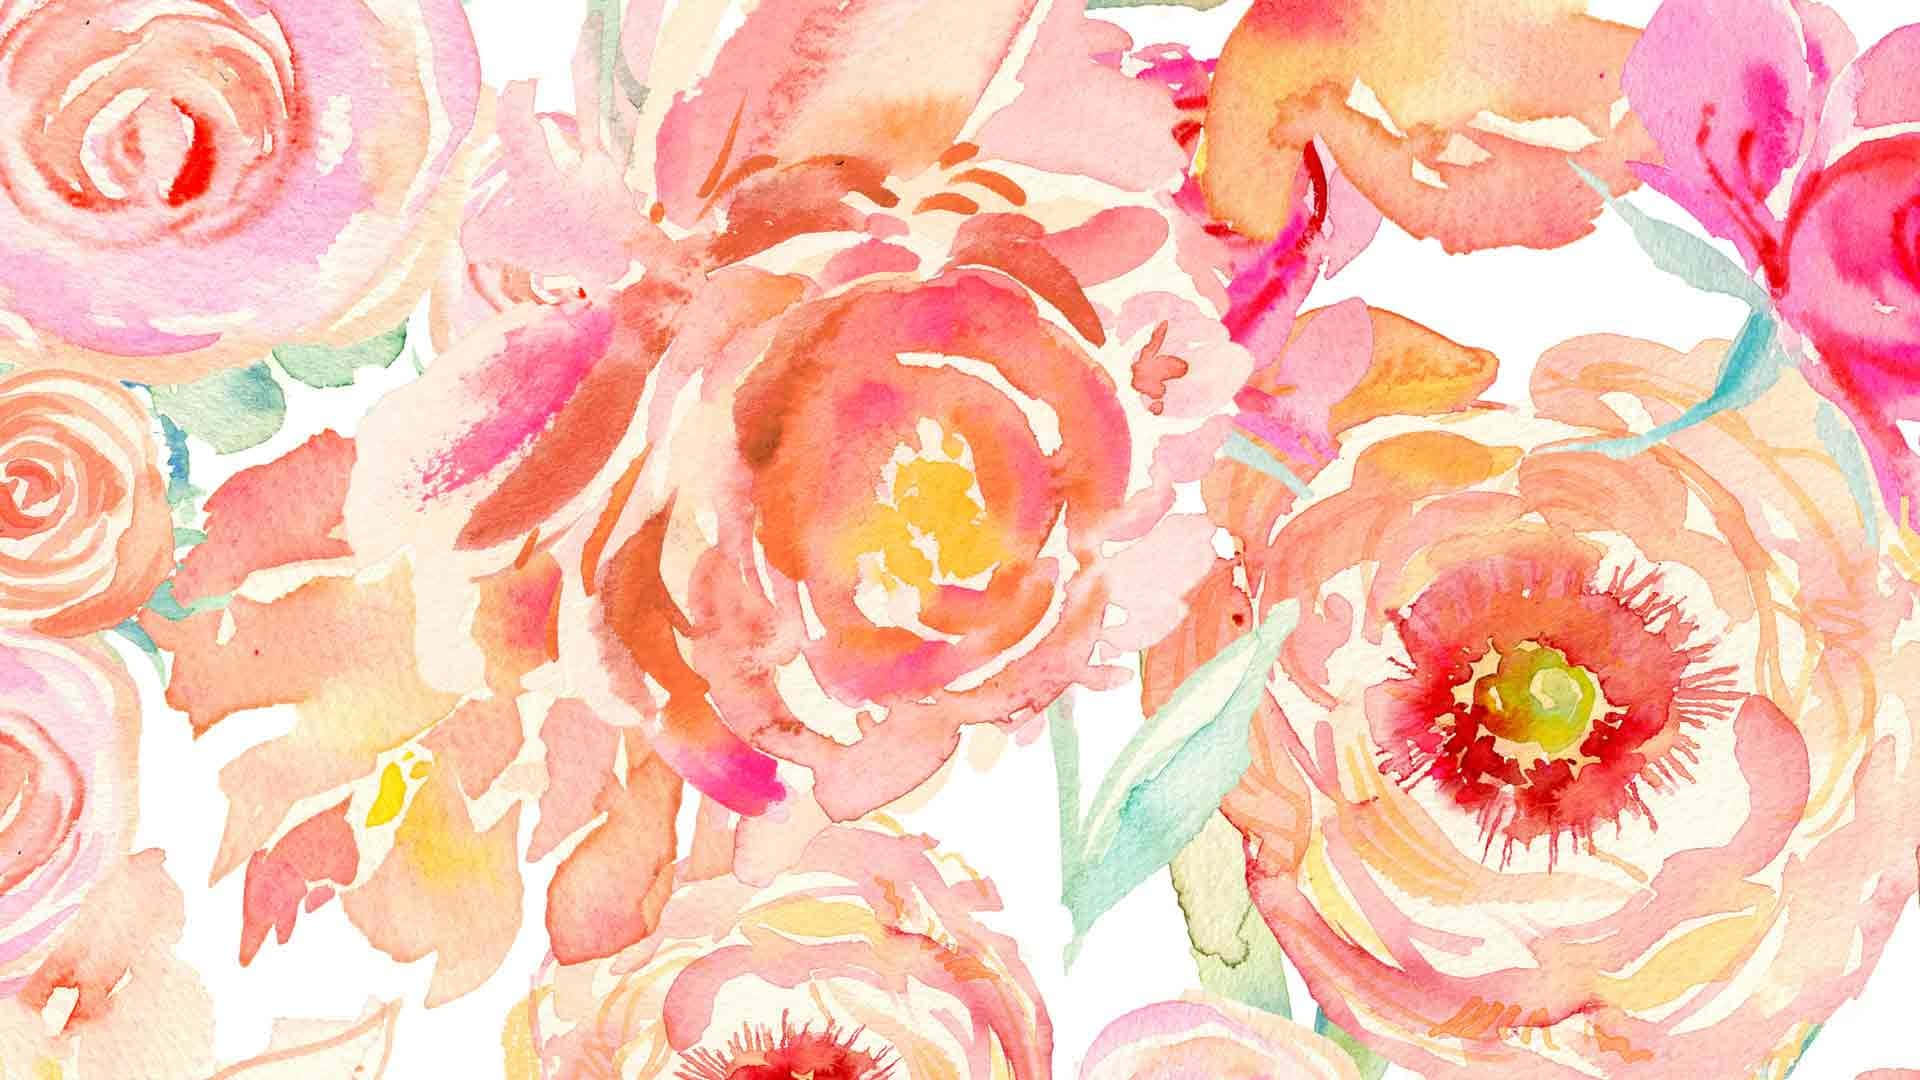 floral background wallpaper